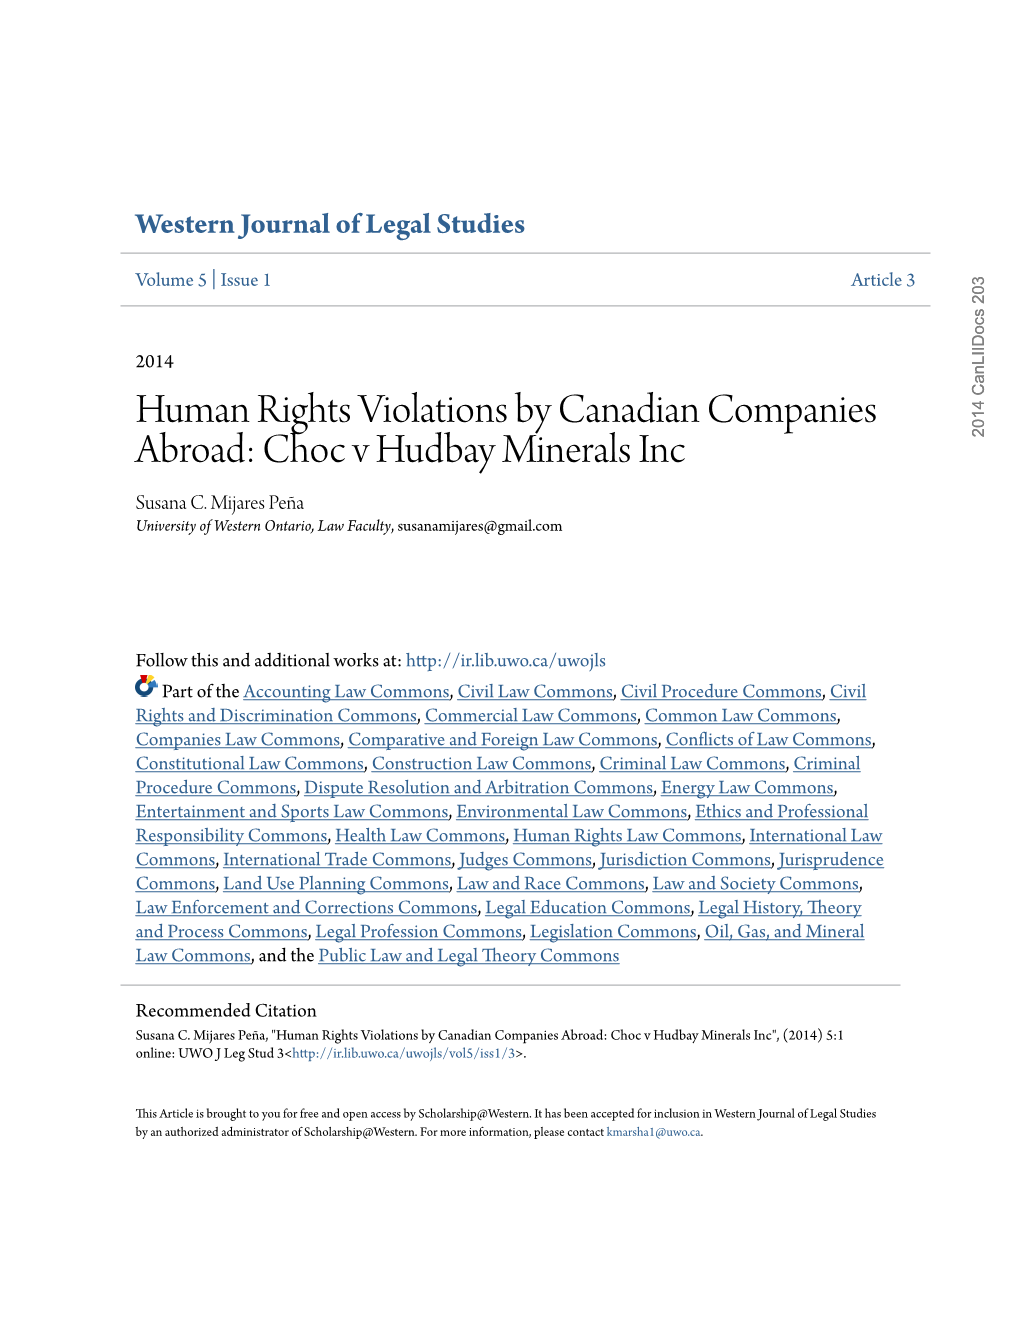 Human Rights Violations by Canadian Companies Abroad: Choc V Hudbay Minerals Inc 2014 Canliidocs 203 Susana C